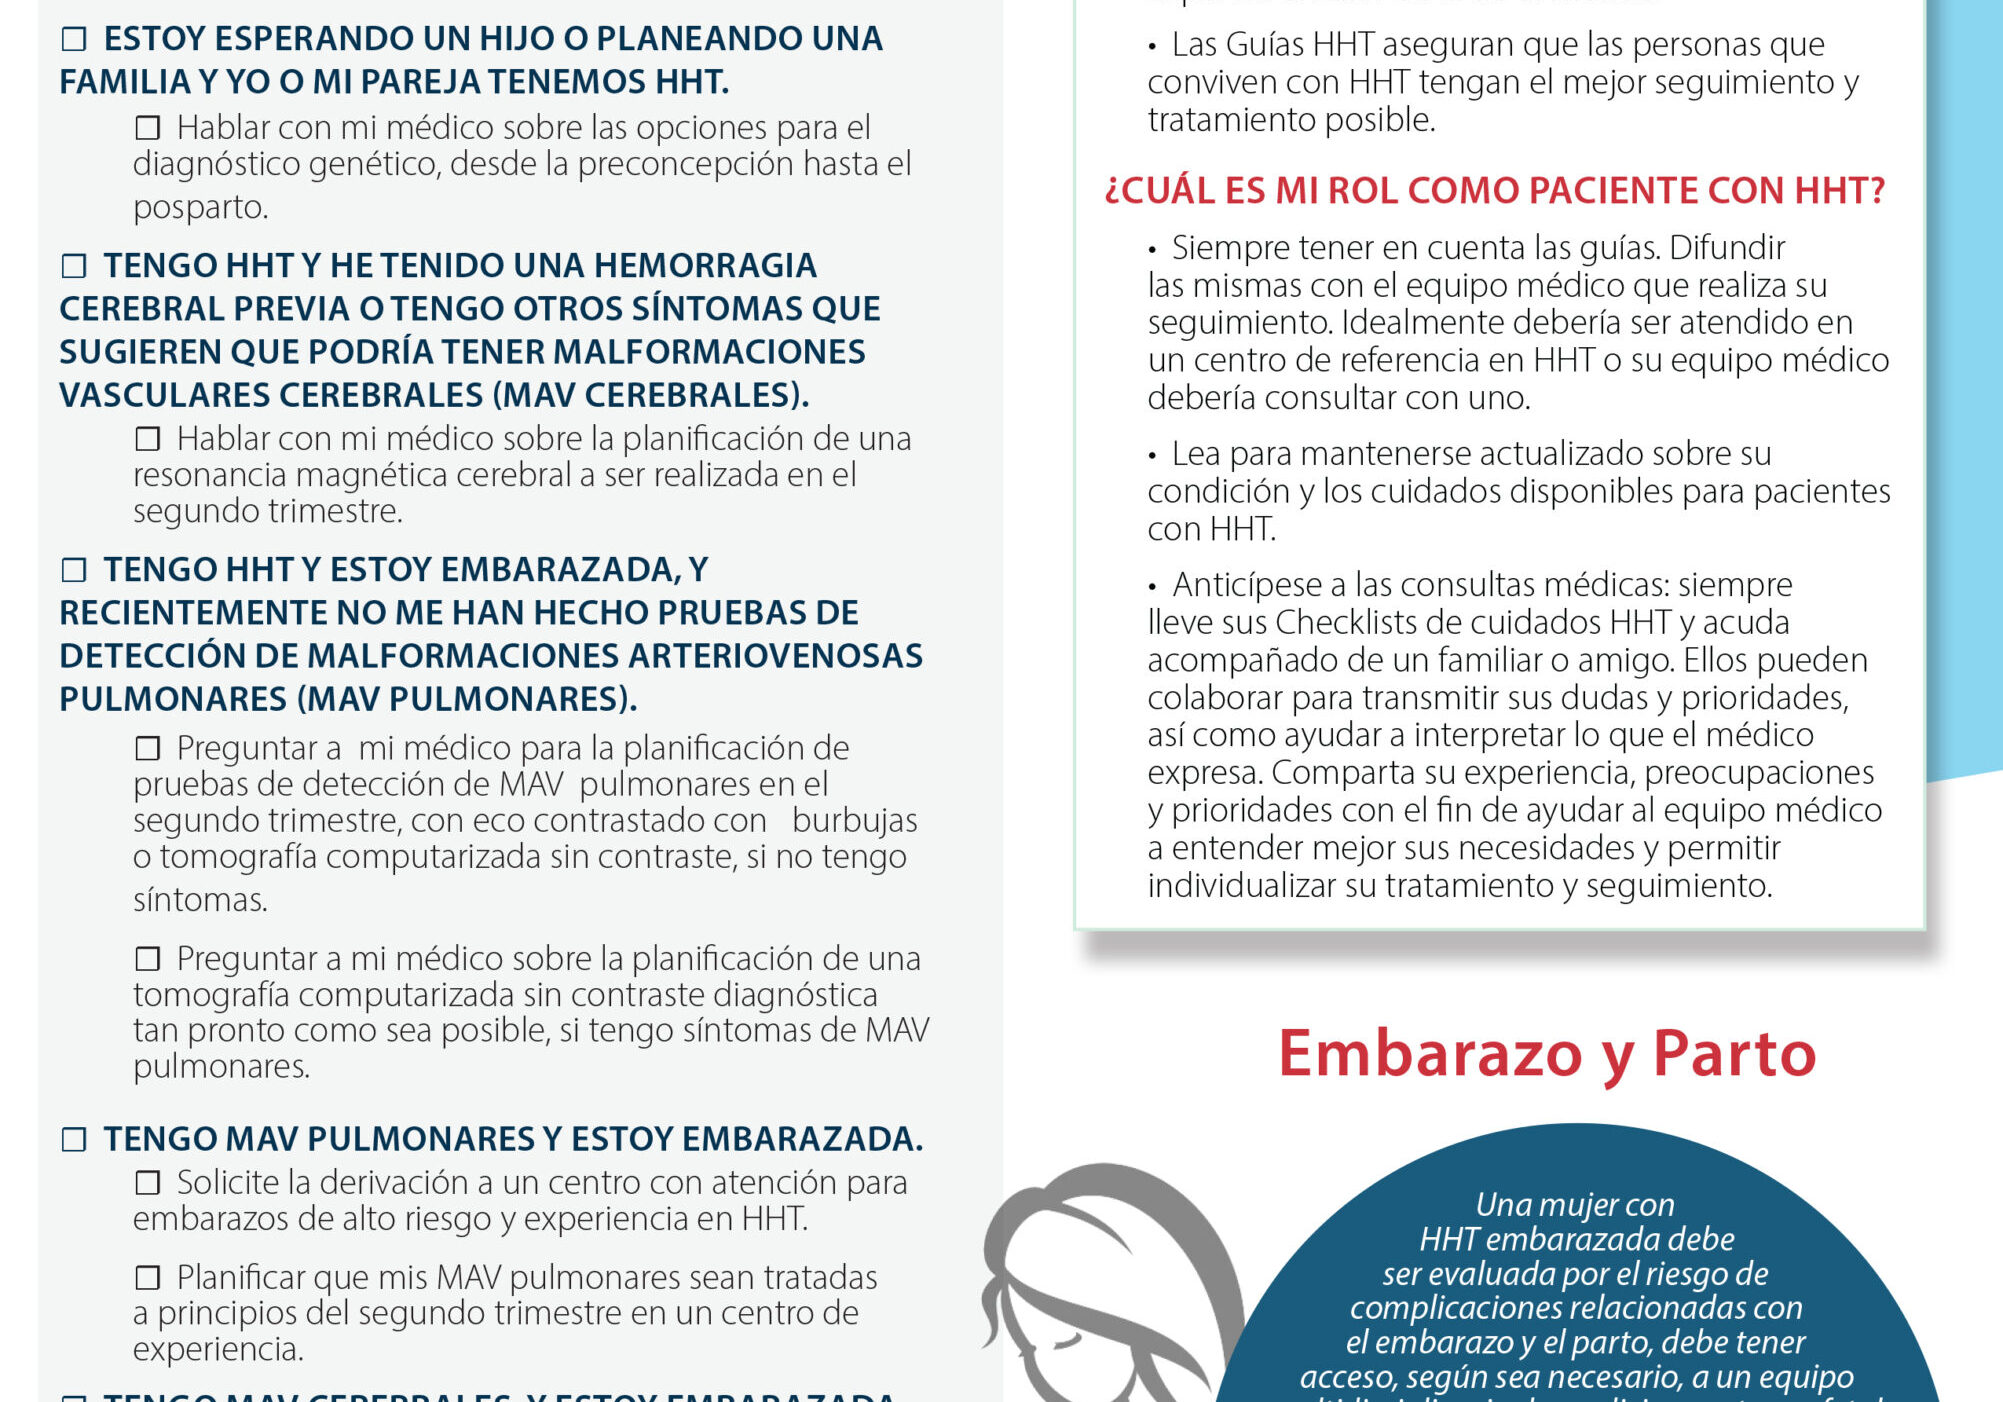 Women's Issues_Checklist Espanol